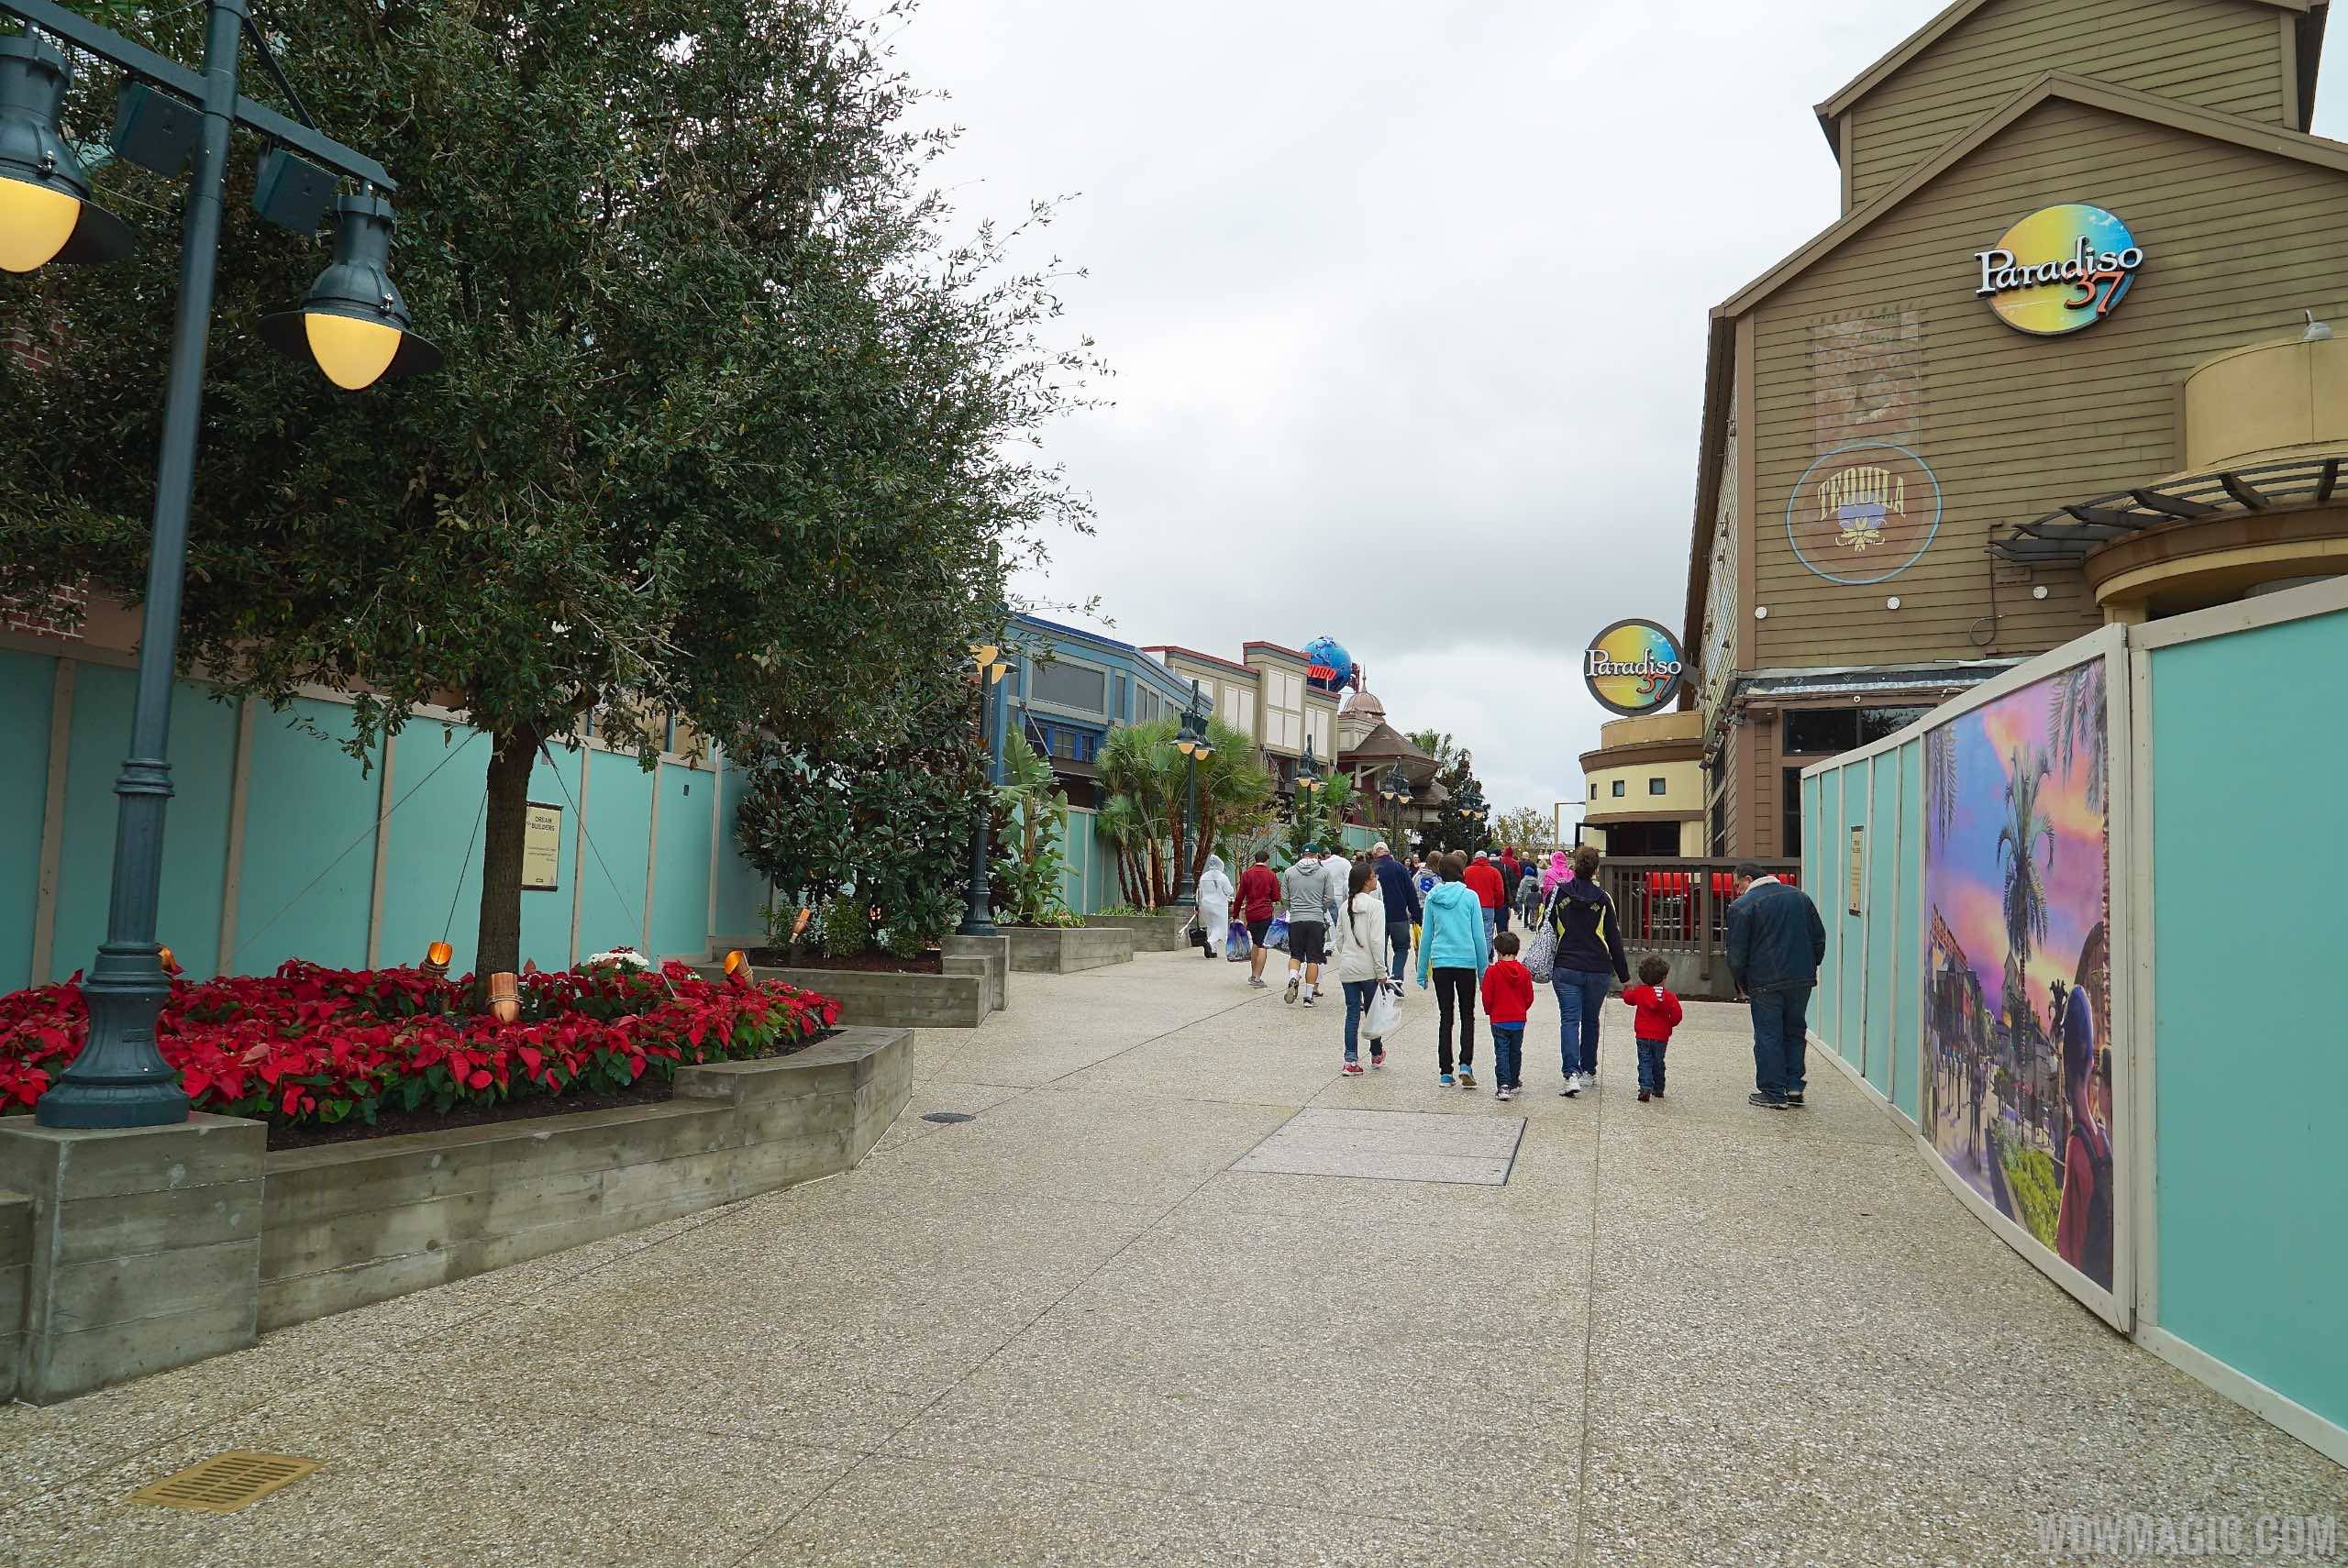 PHOTOS - Walkway through 'The Landing' now open at the future Disney Springs